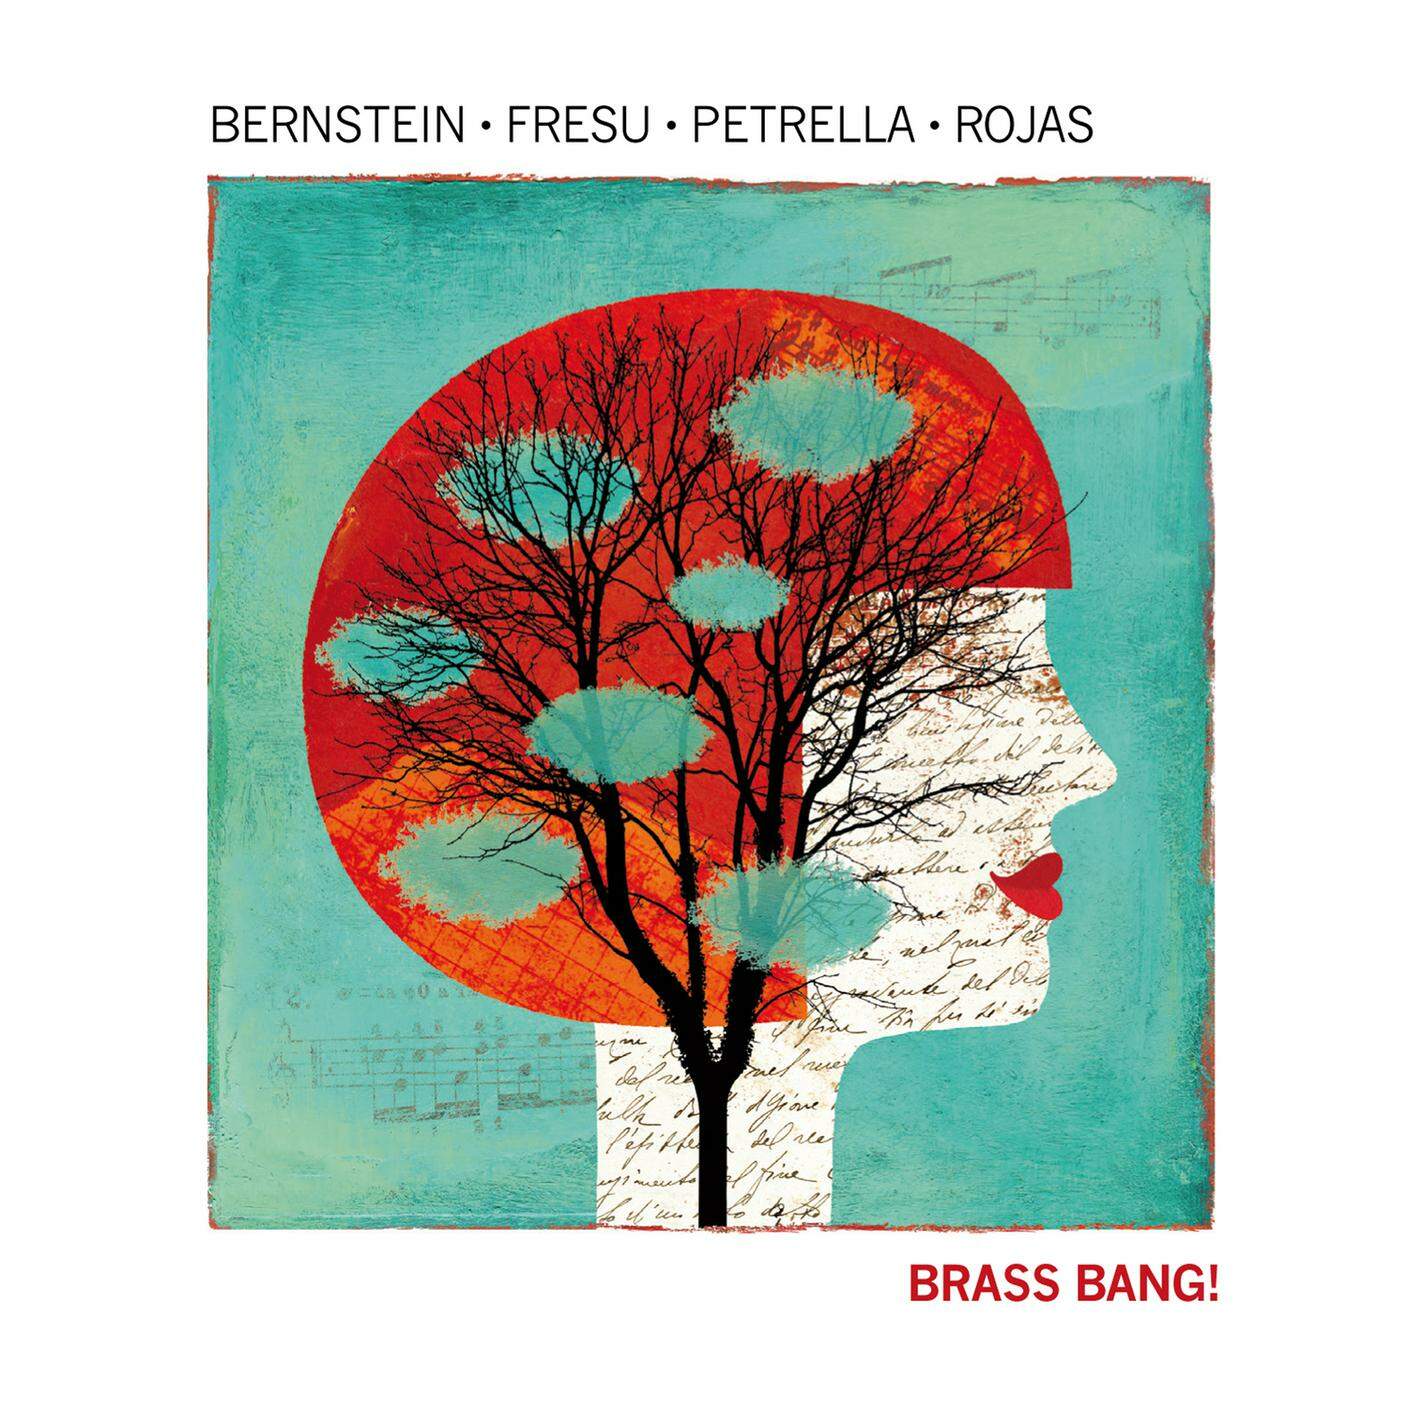 Bernstein, Fresu, Petrella & Rojas; "Surgentem Cum Victoria"; Bonsai Music (dettaglio copertina)